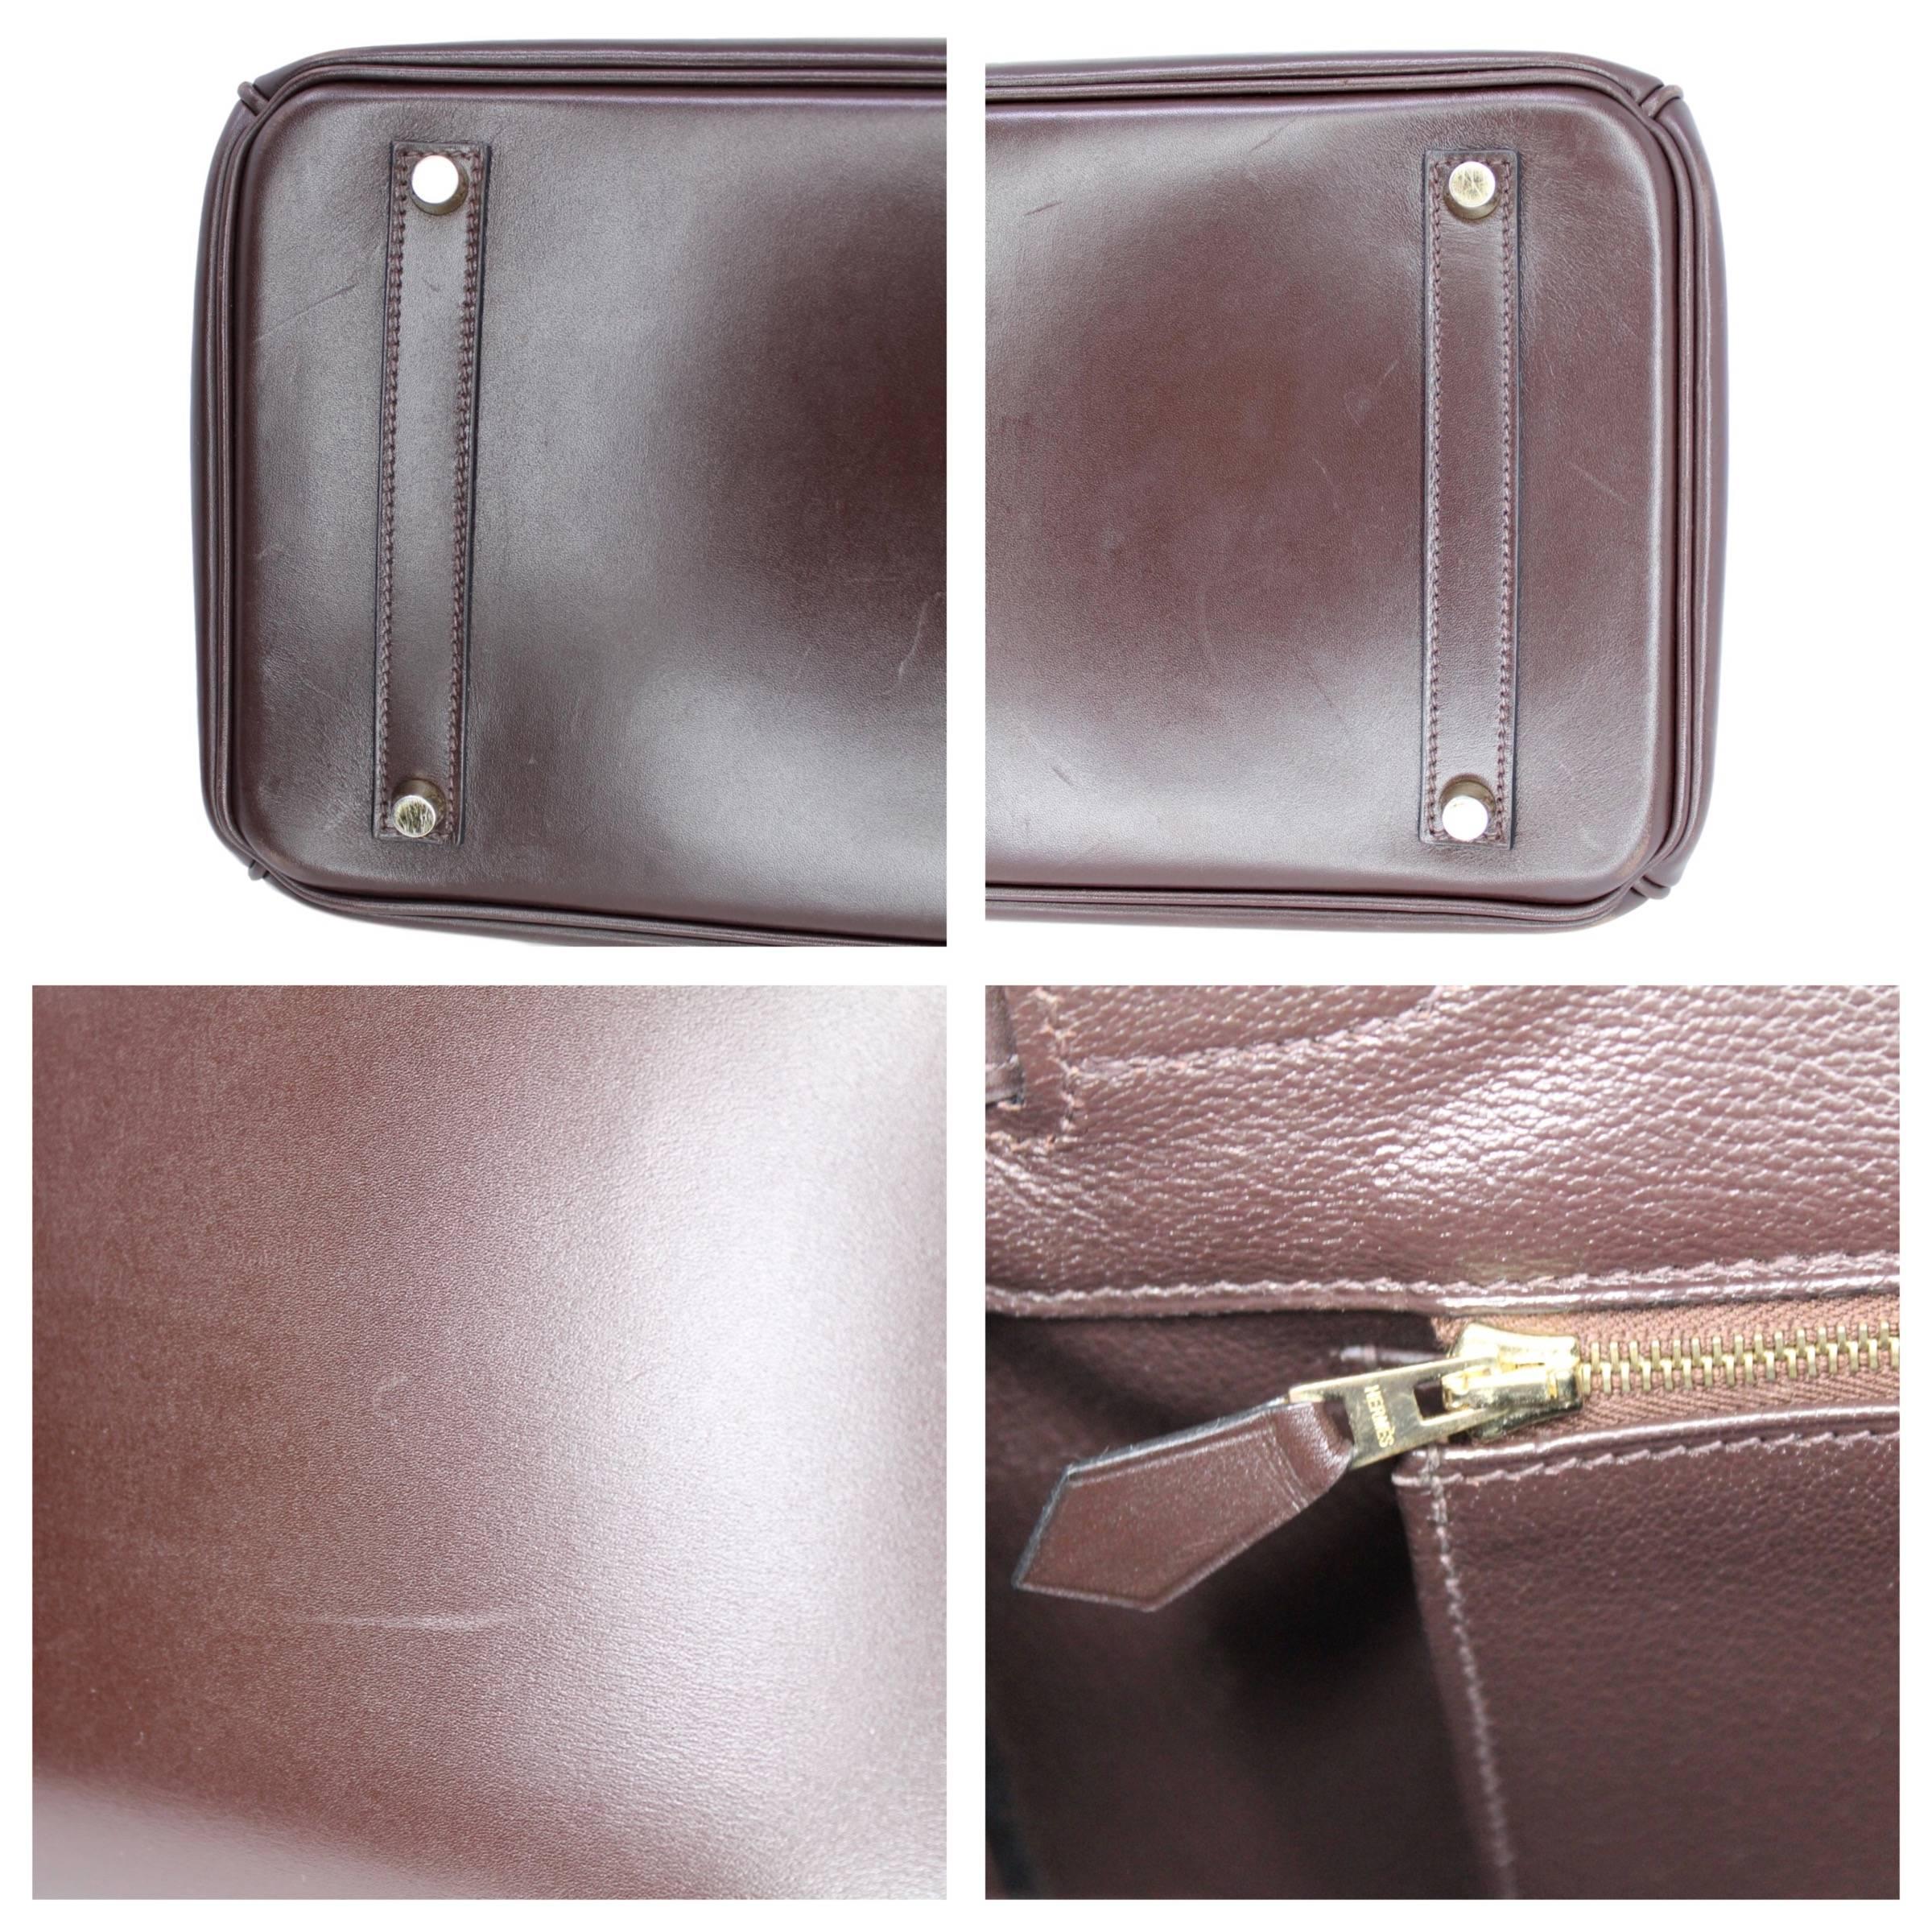 Hermes Birkin 35cm Chocolate Brown Smooth Leather For Sale 3